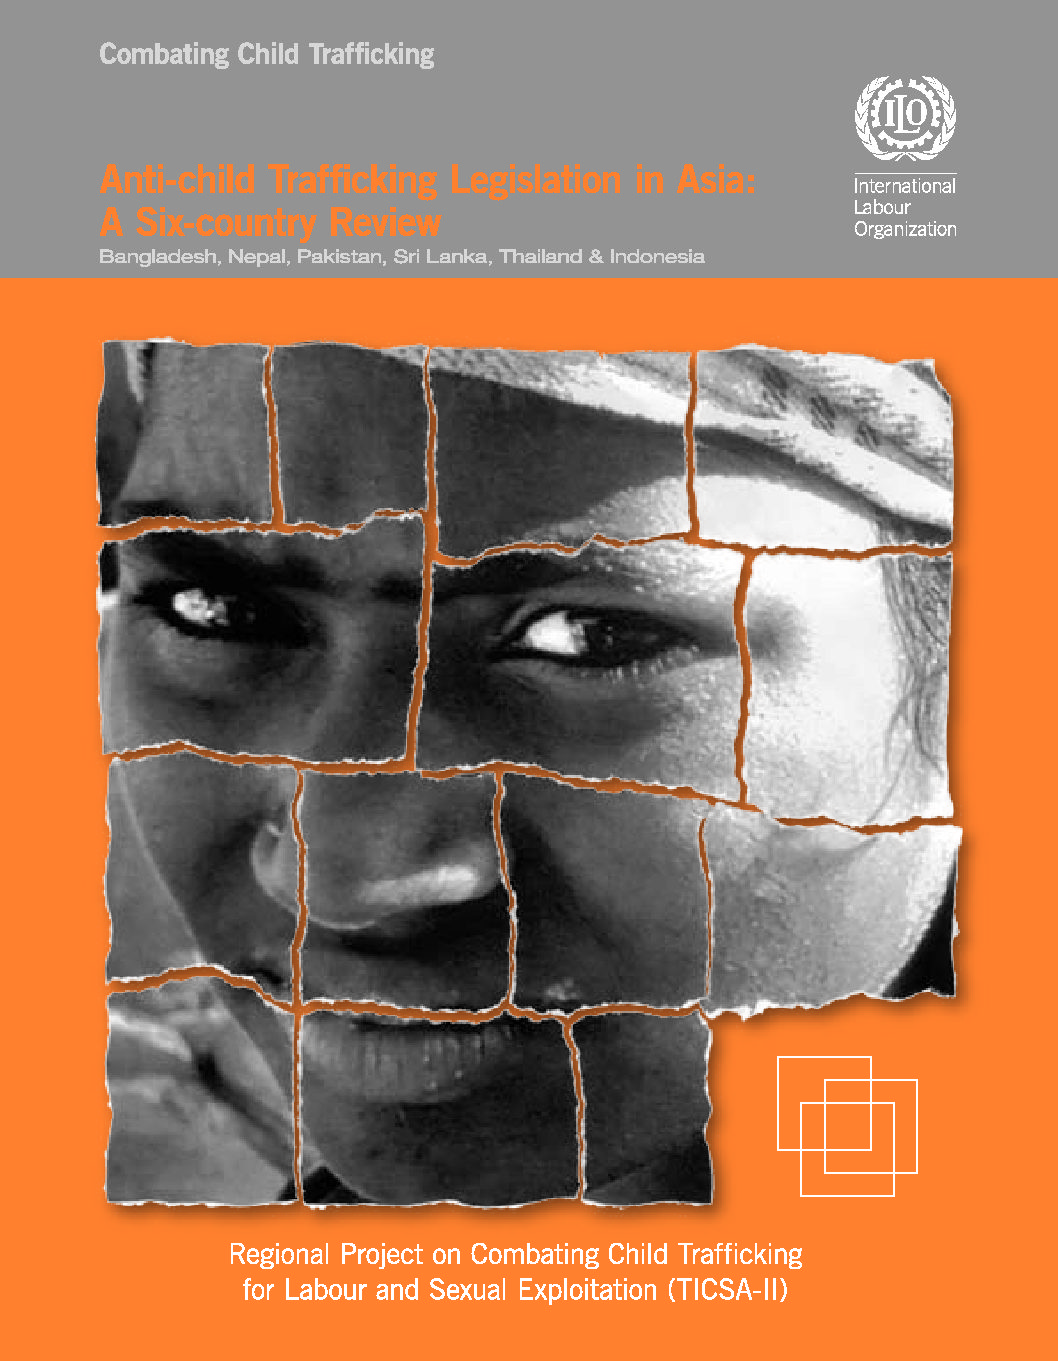 Anti-child Trafficking Legislation in Asia: A Six-country Review (Bangladesh, Nepal, Pakistan, Sri Lanka, Thailand & Indonesia)